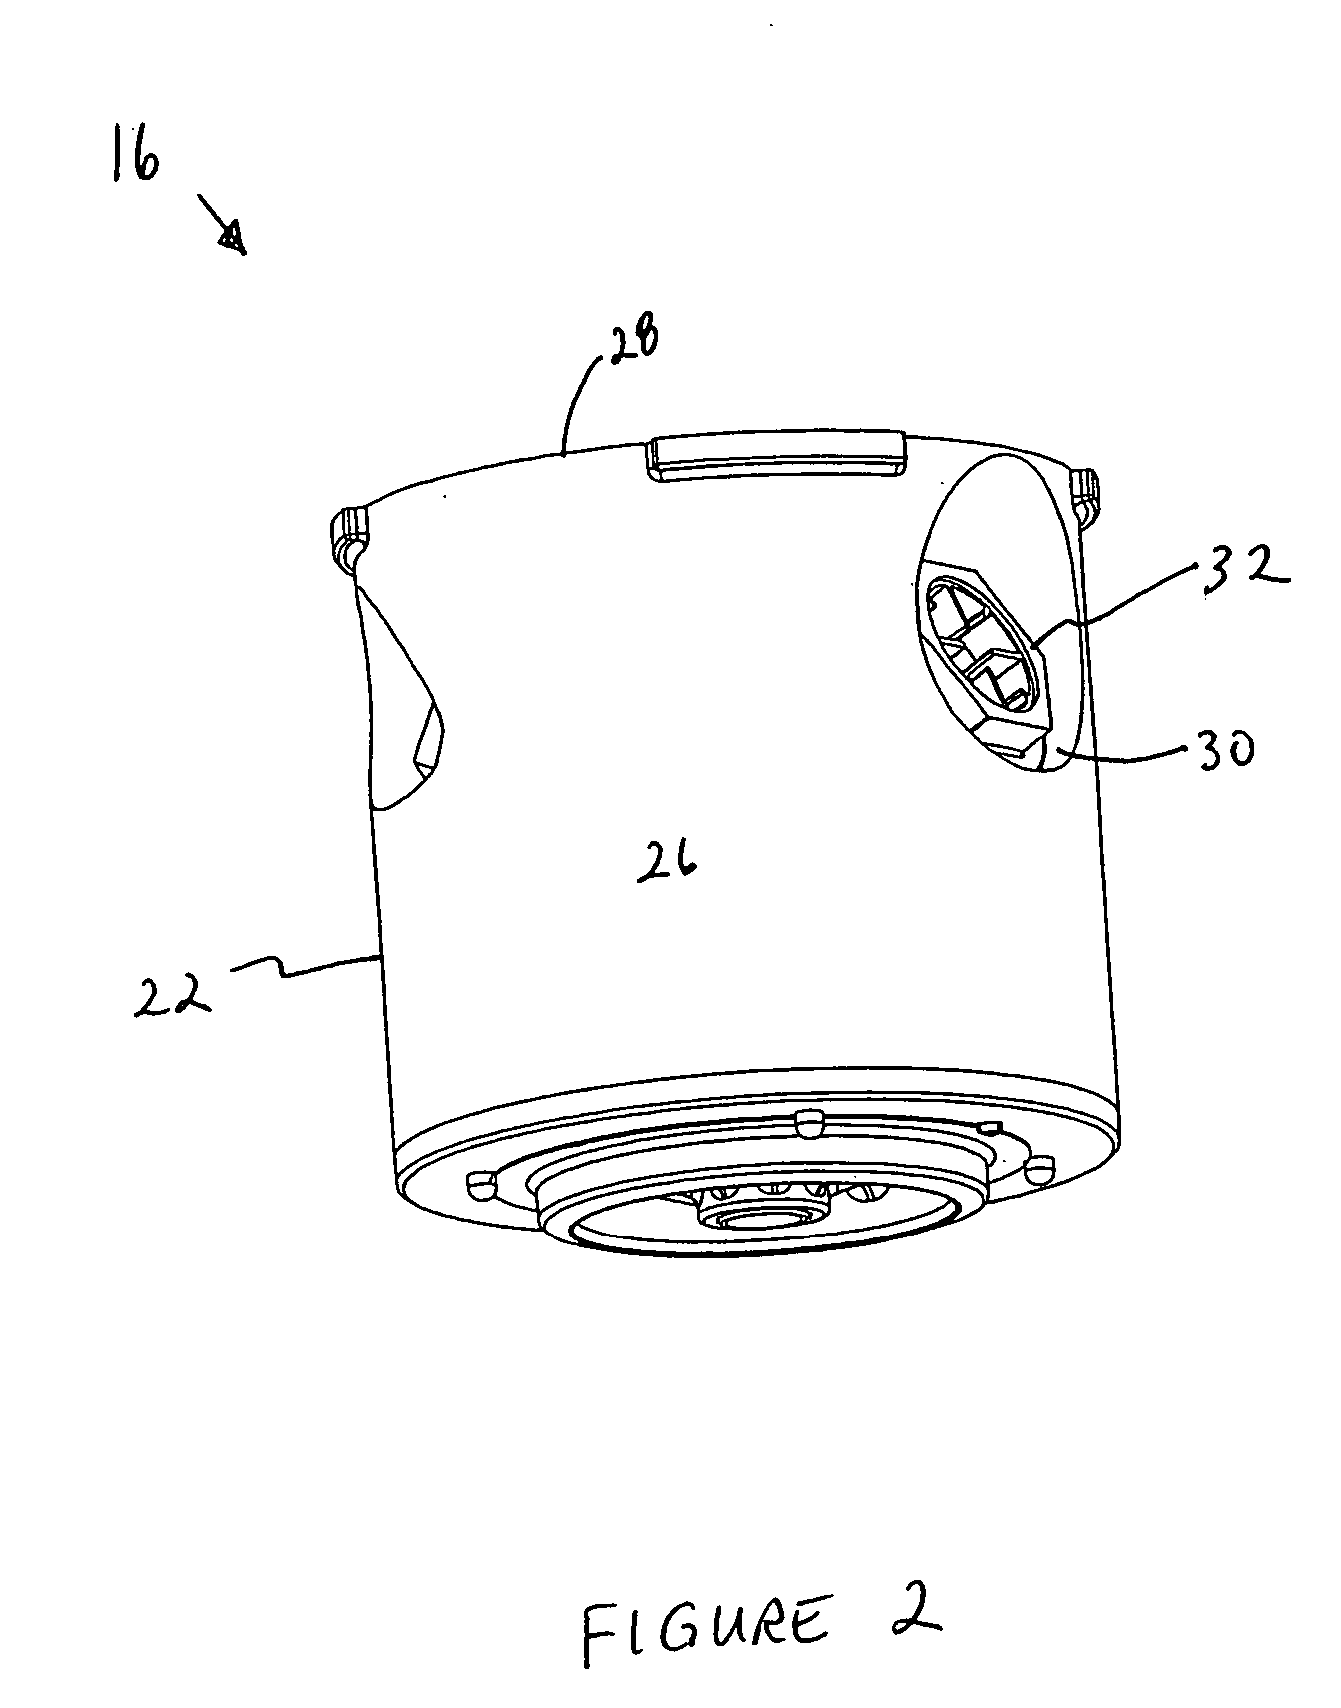 Sprinkler with nozzle for uniform fluid distribution